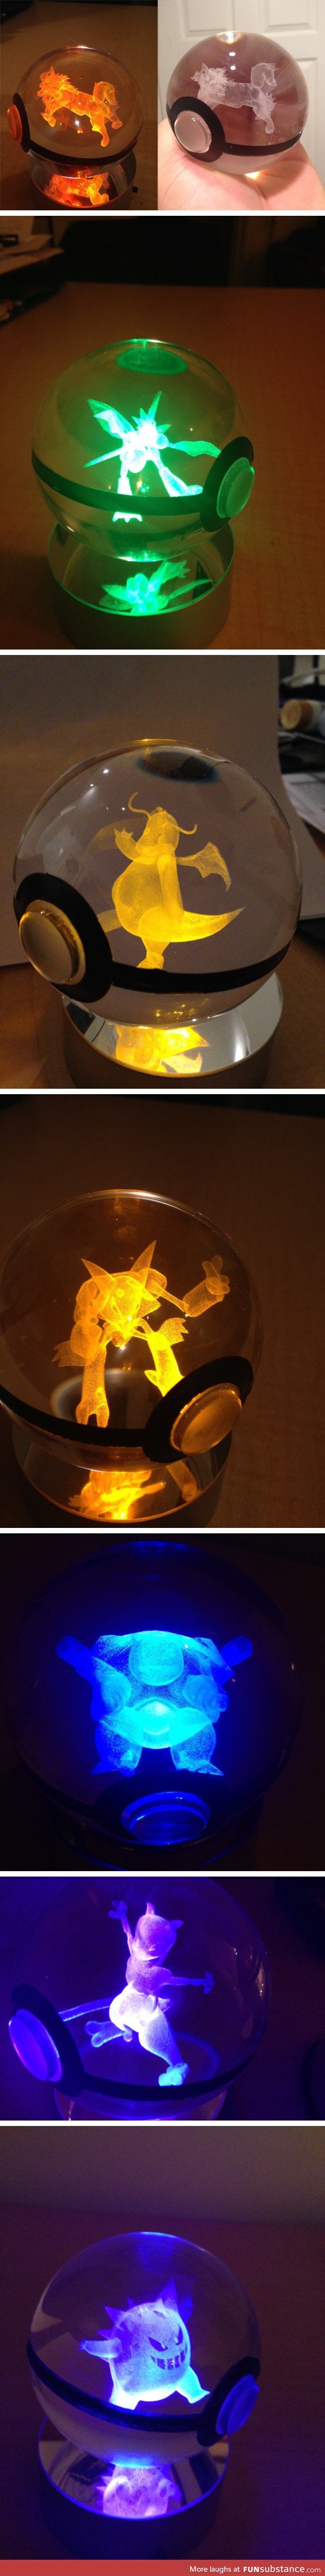 Pokemon in 3D laser engraved crystal ball